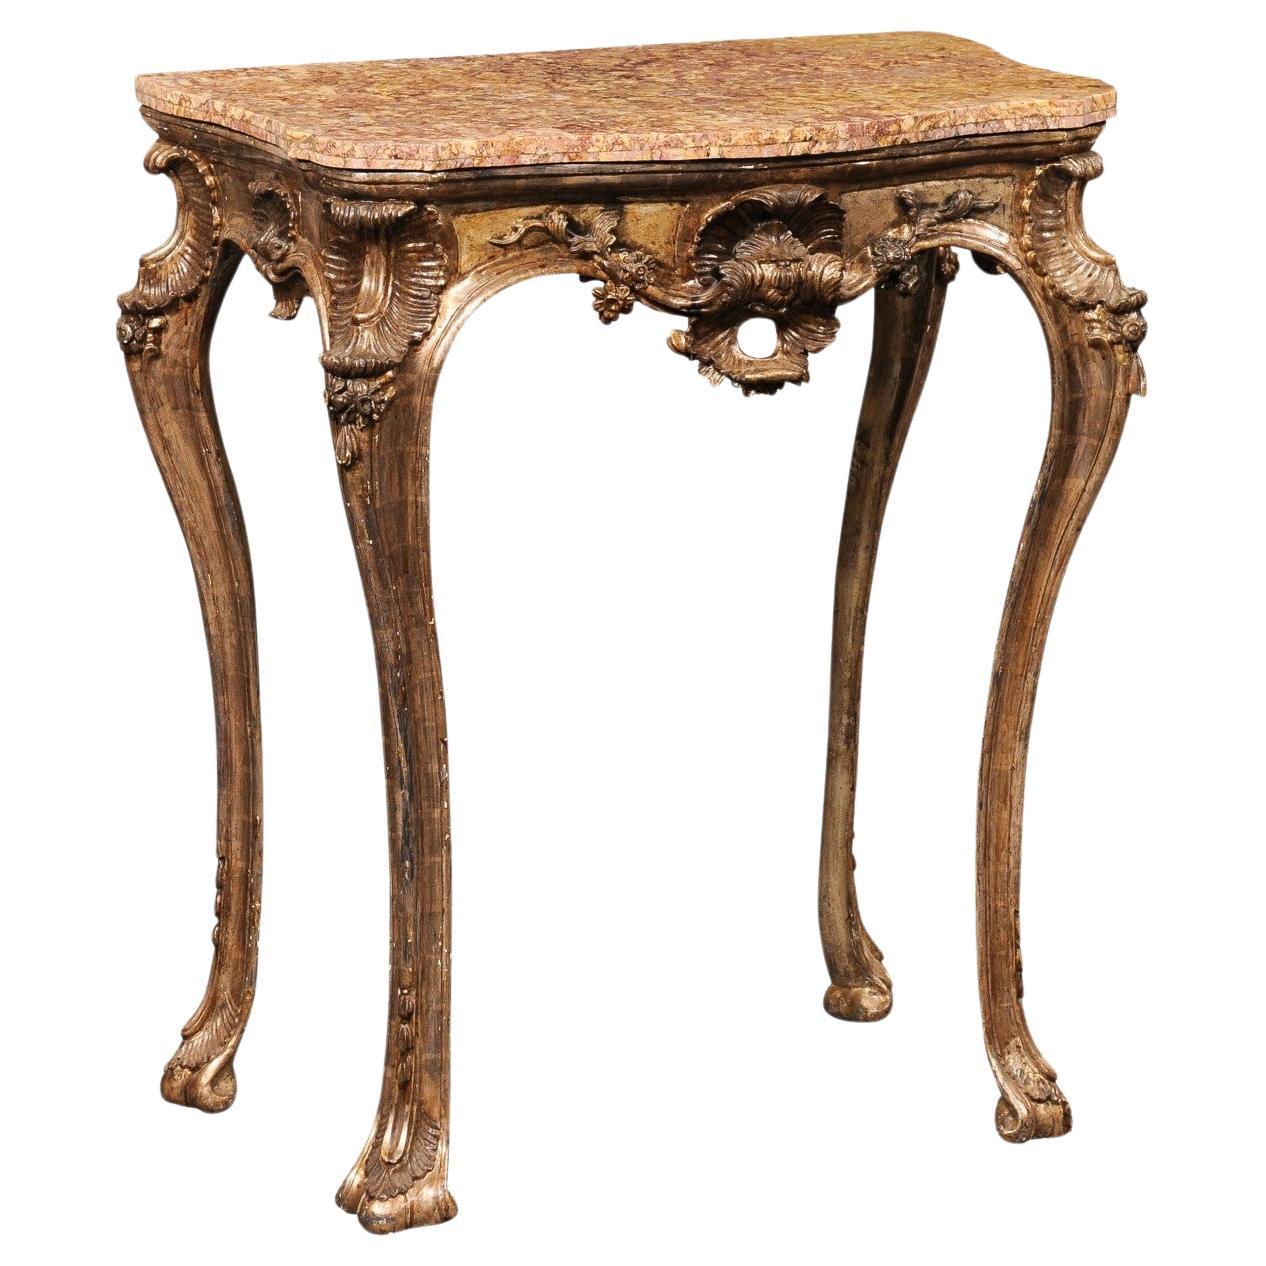 Italian Period Rococo Ornate Accent Table w/its Original Finish & Marble Top For Sale